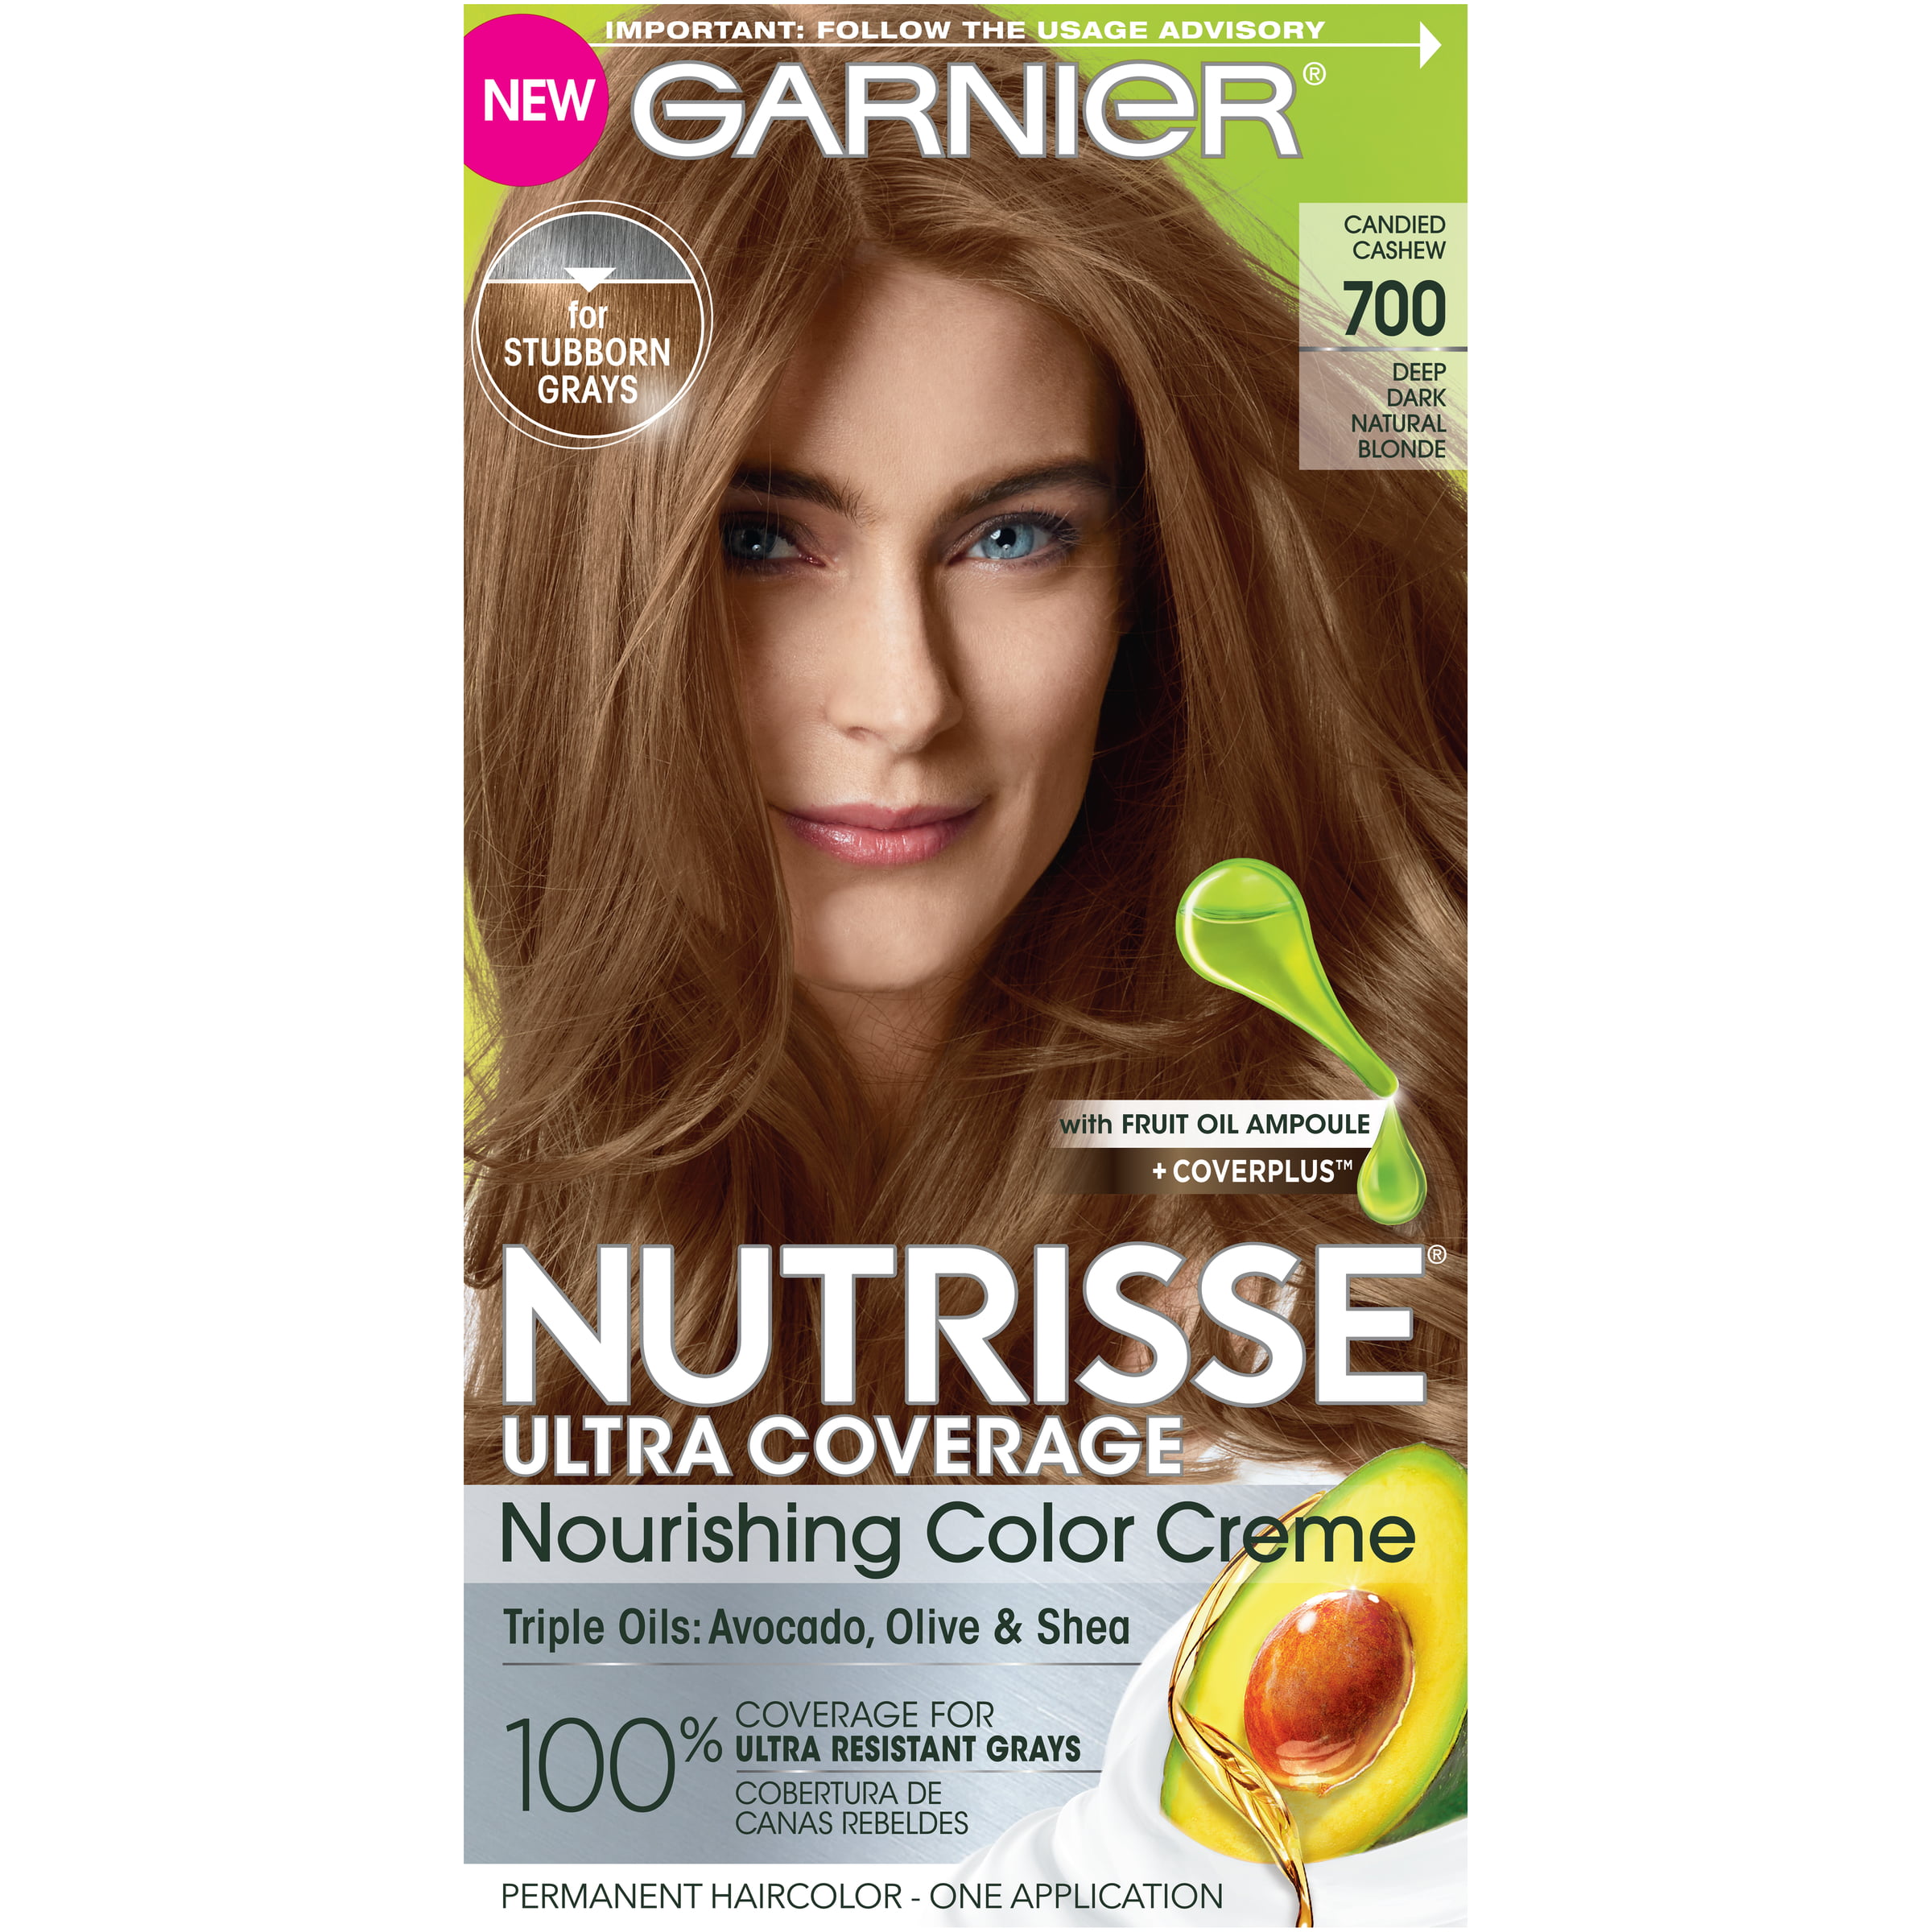 Garnier Nutrisse Nourishing Hair Color Creme, 530 Deep Medium Golden Brown  